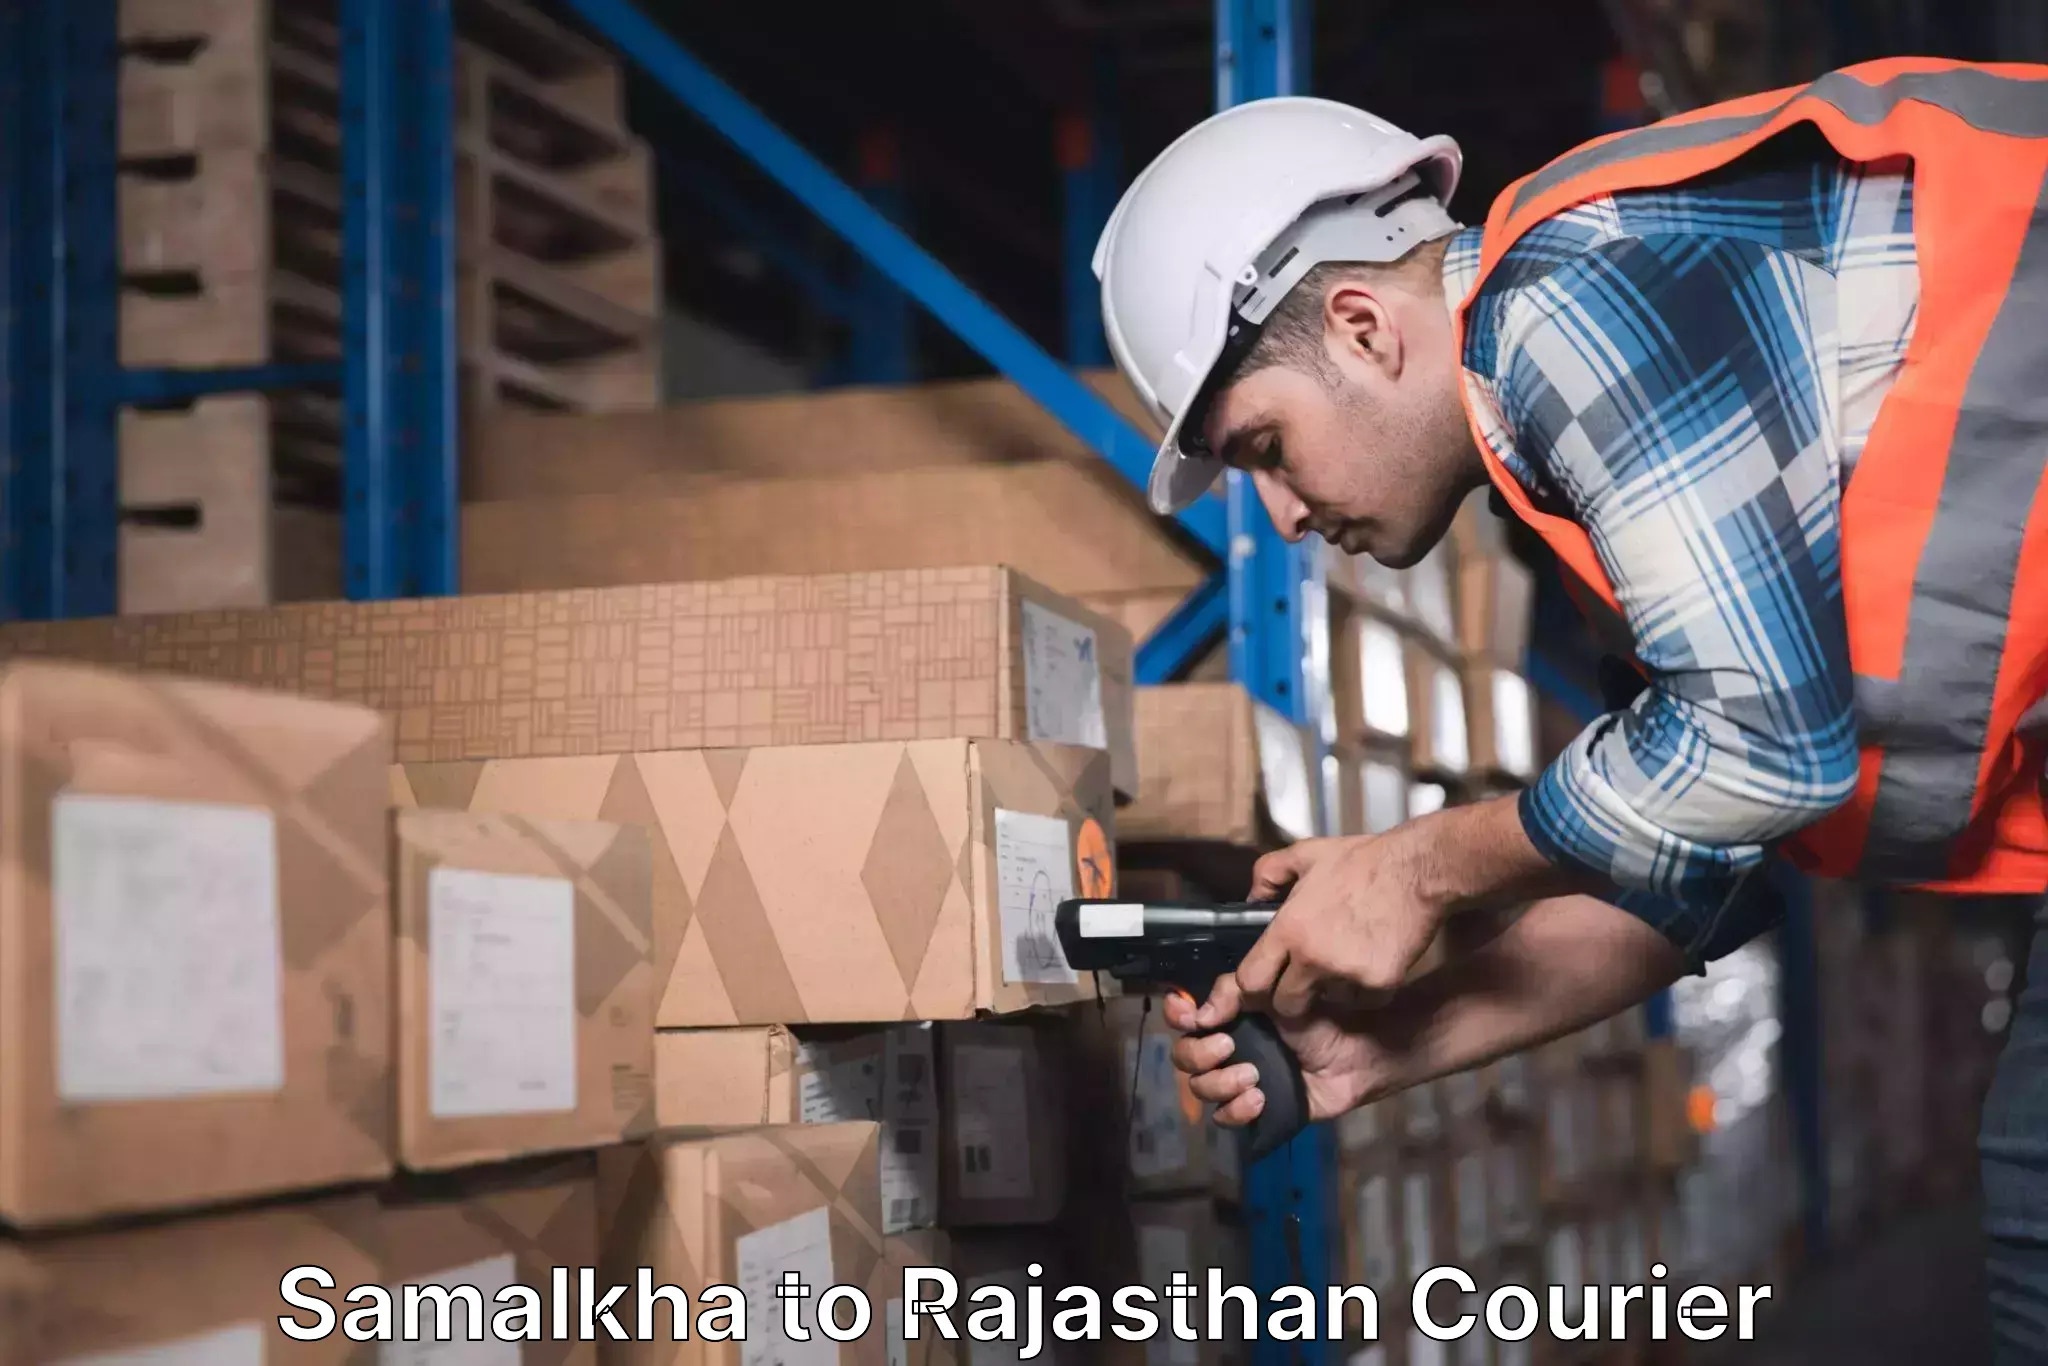 Courier service comparison Samalkha to Raipur Pali